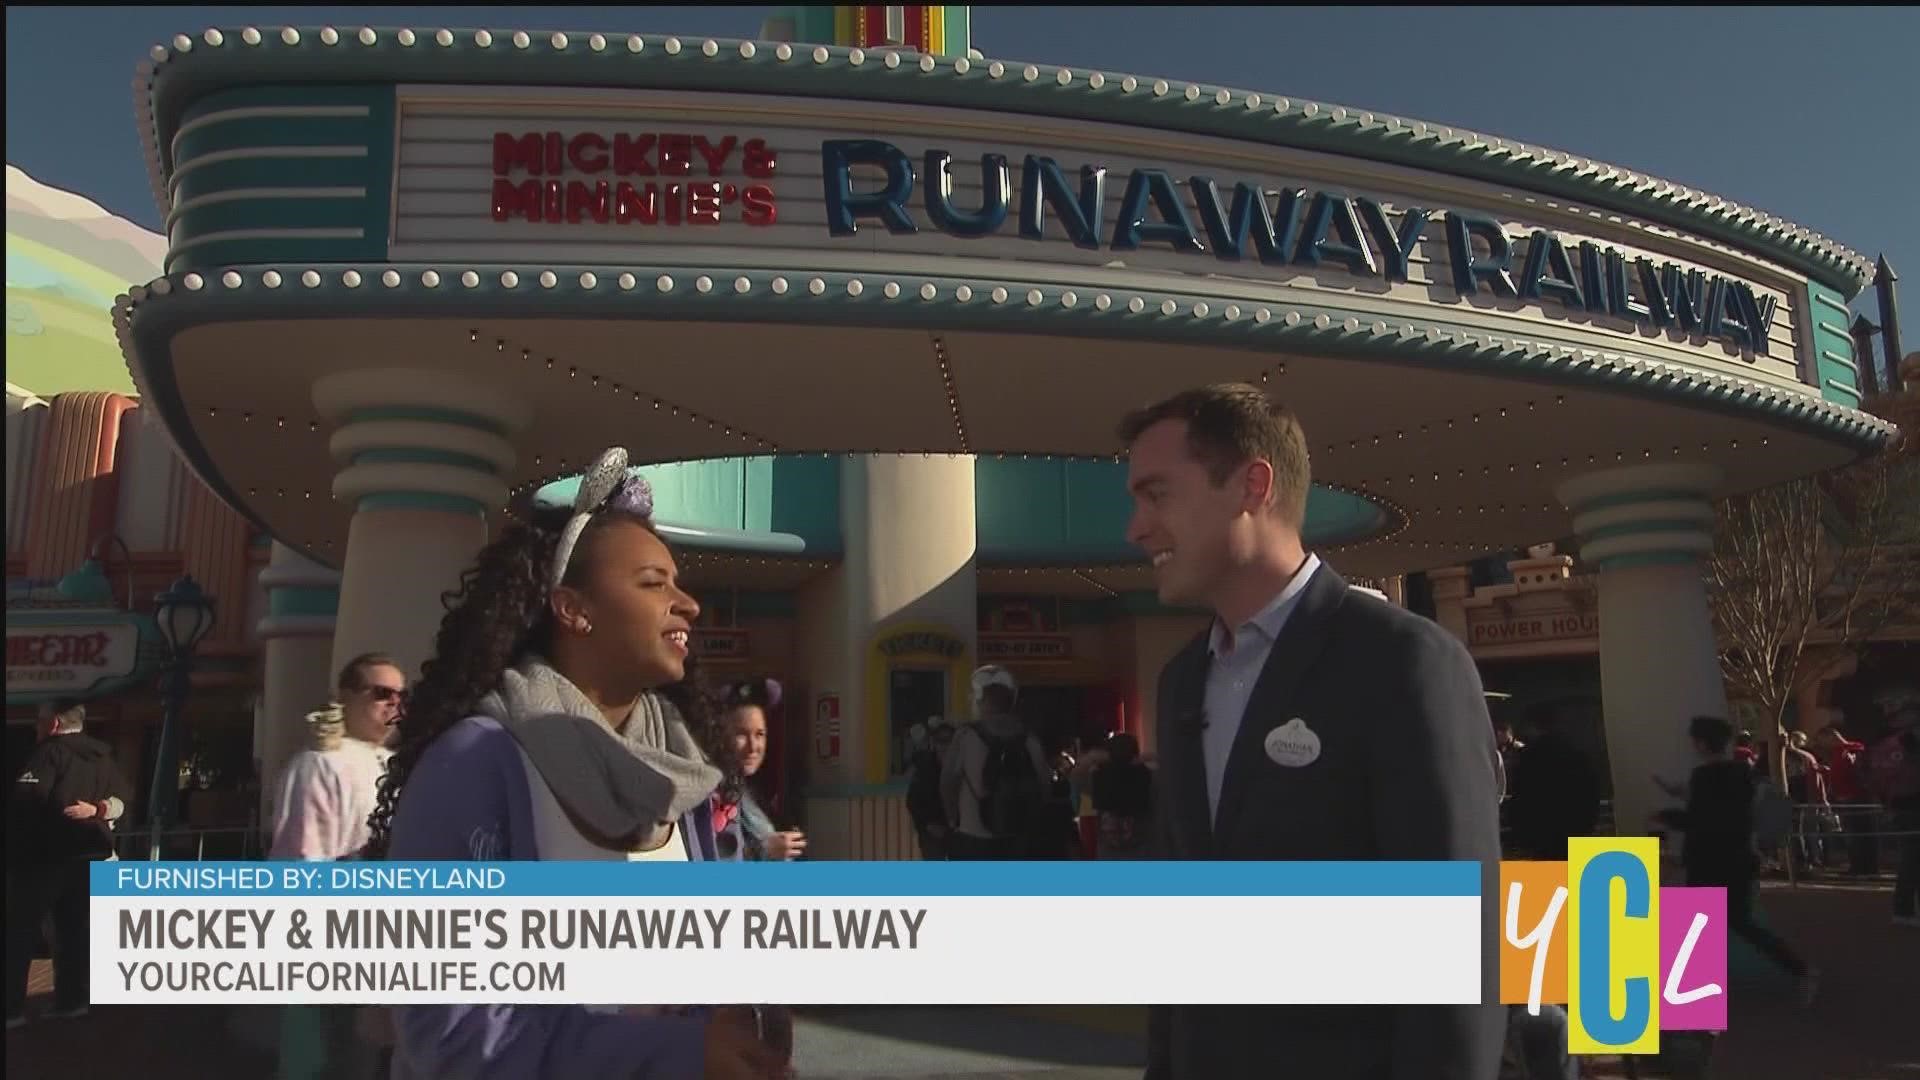 As part of the Disney100 anniversary celebration, Disneyland Park debuts it's newest attraction--Mickey & Minnie’s Runaway Railway!